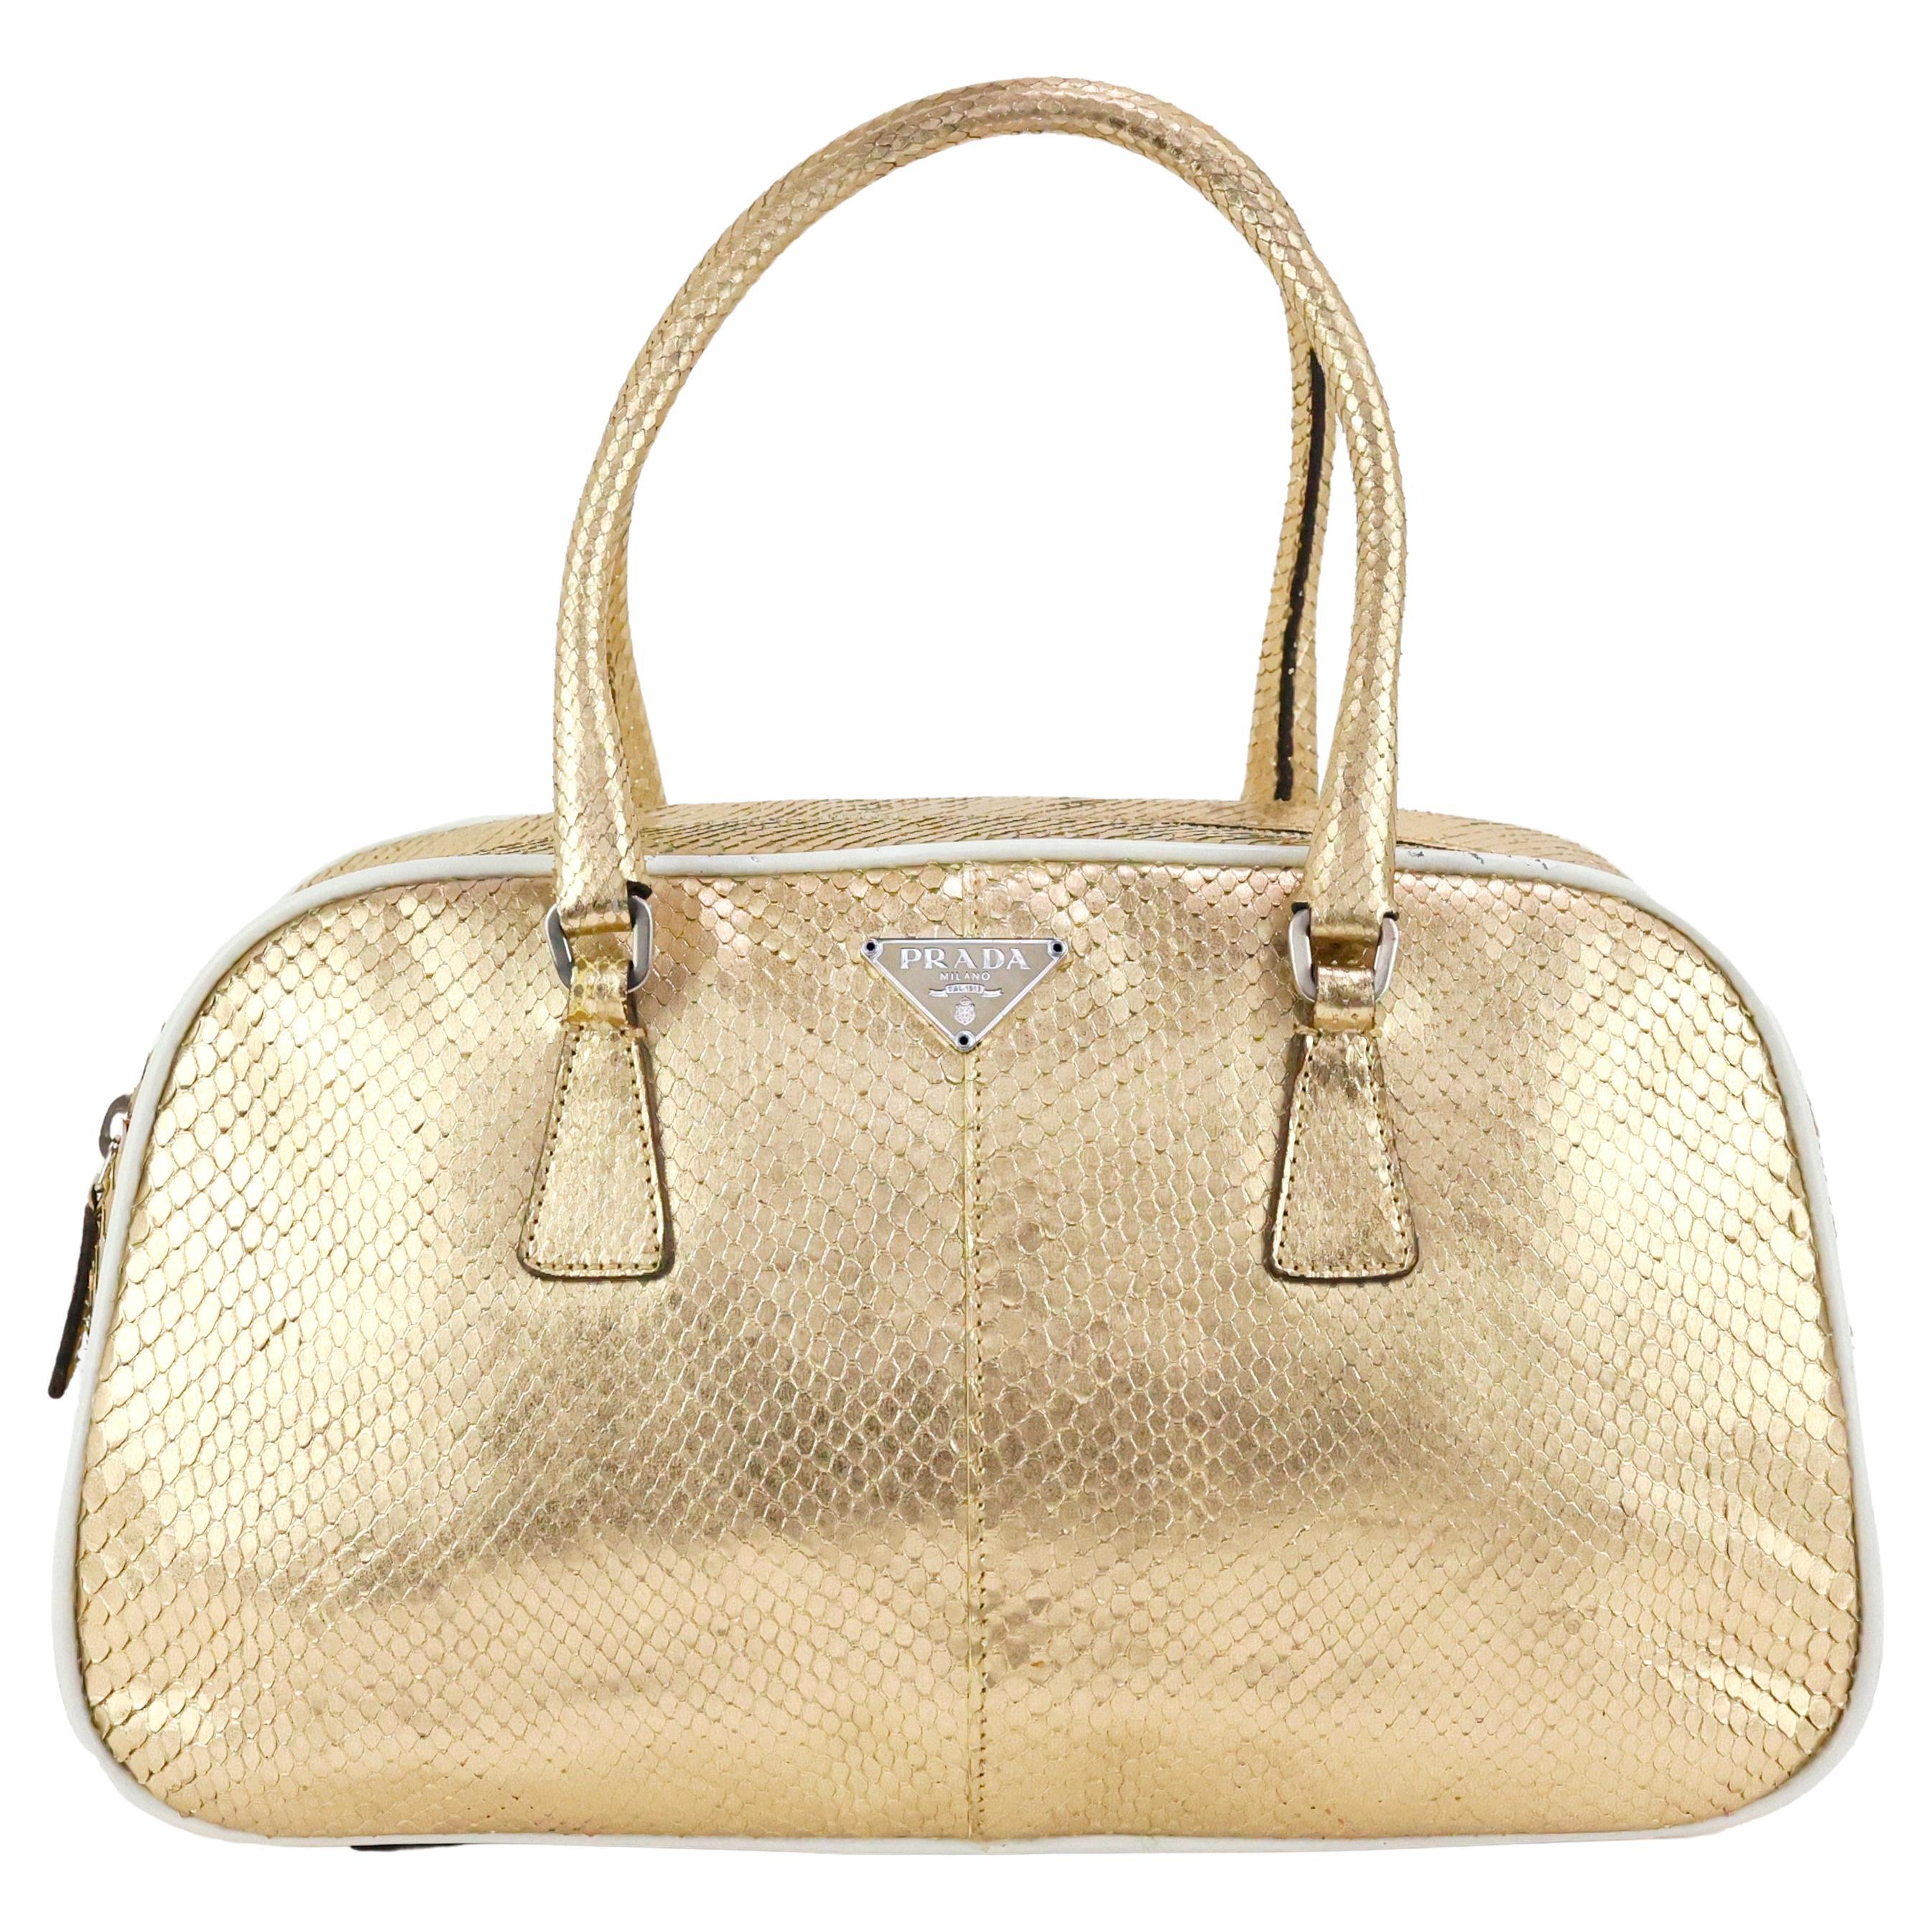 Do Prada bags have gold hardware?